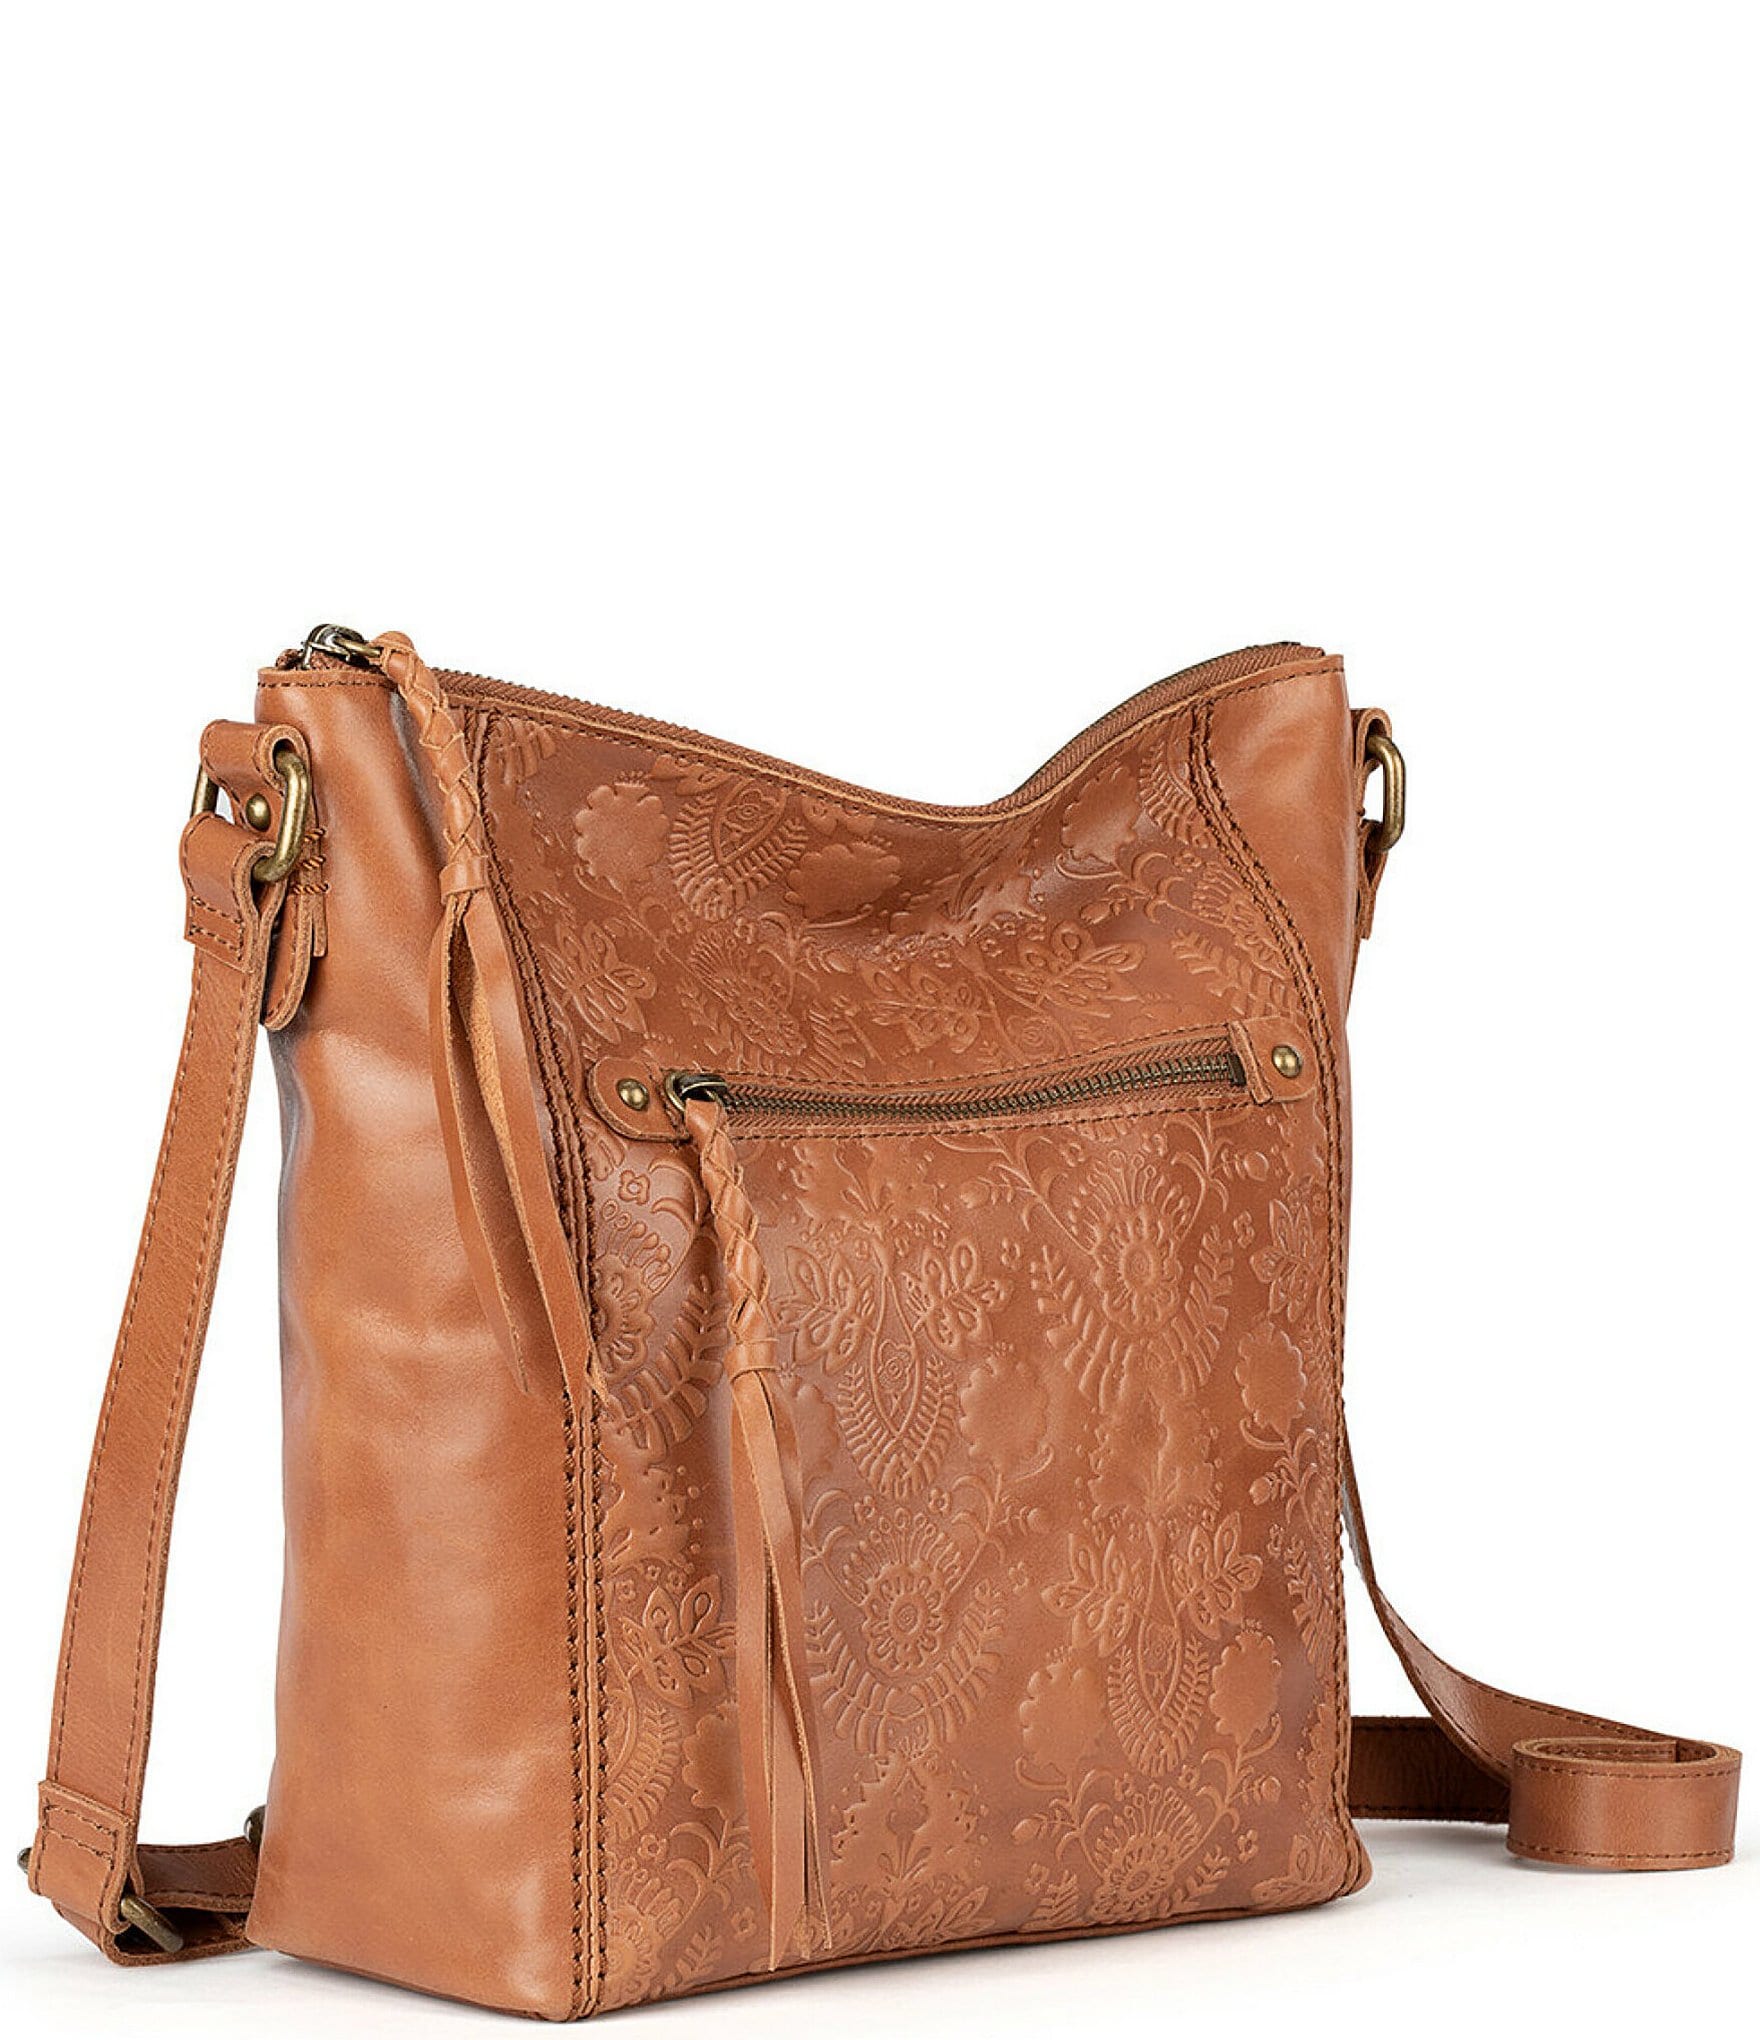 The Sak Ashland Crossbody Bag in Leather, Buttercup II: Handbags: Amazon.com